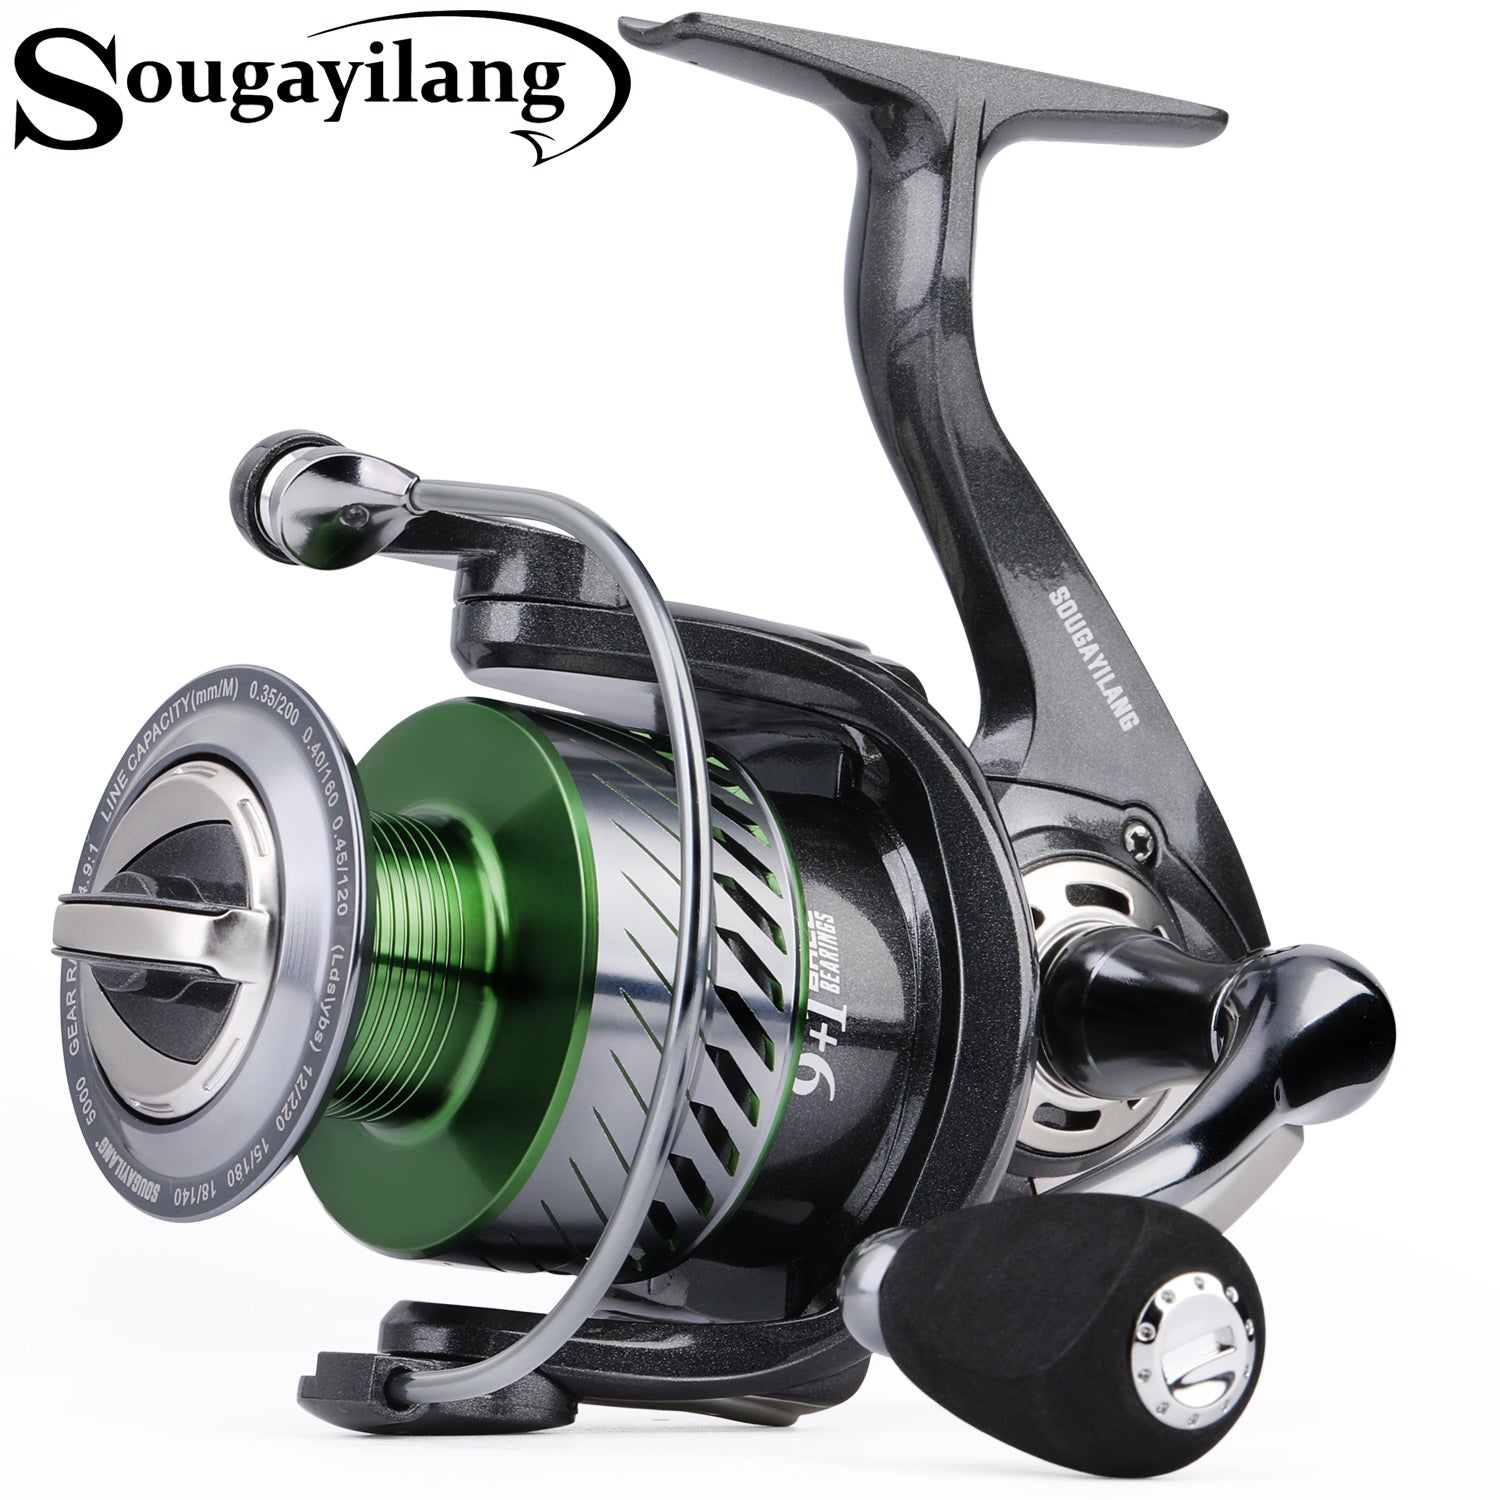 Sougayilang Arrow Spinning Fishing Reel - 5.2:1/4.9:1 High Speed One